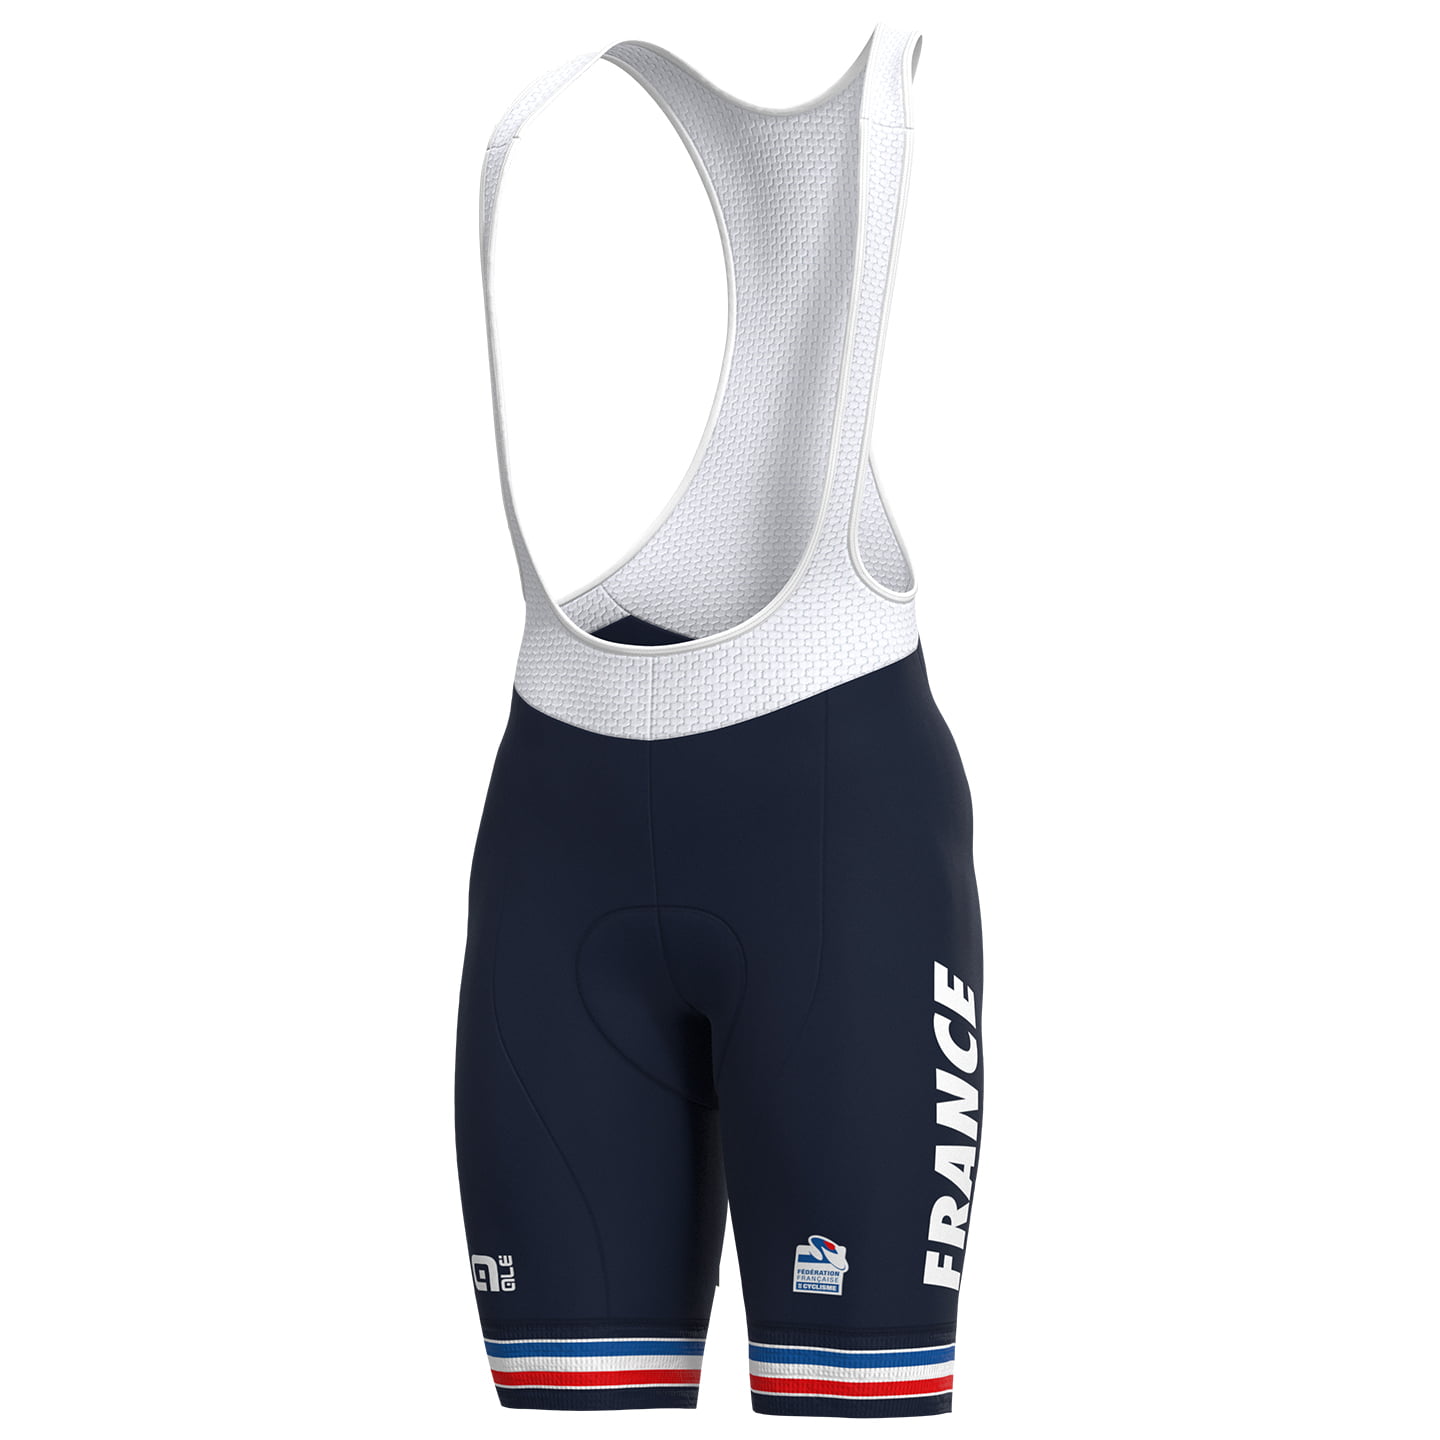 FRENCH NATIONAL TEAM 2022 Bib Shorts, for men, size 3XL, Cycling bibs, Bike gear